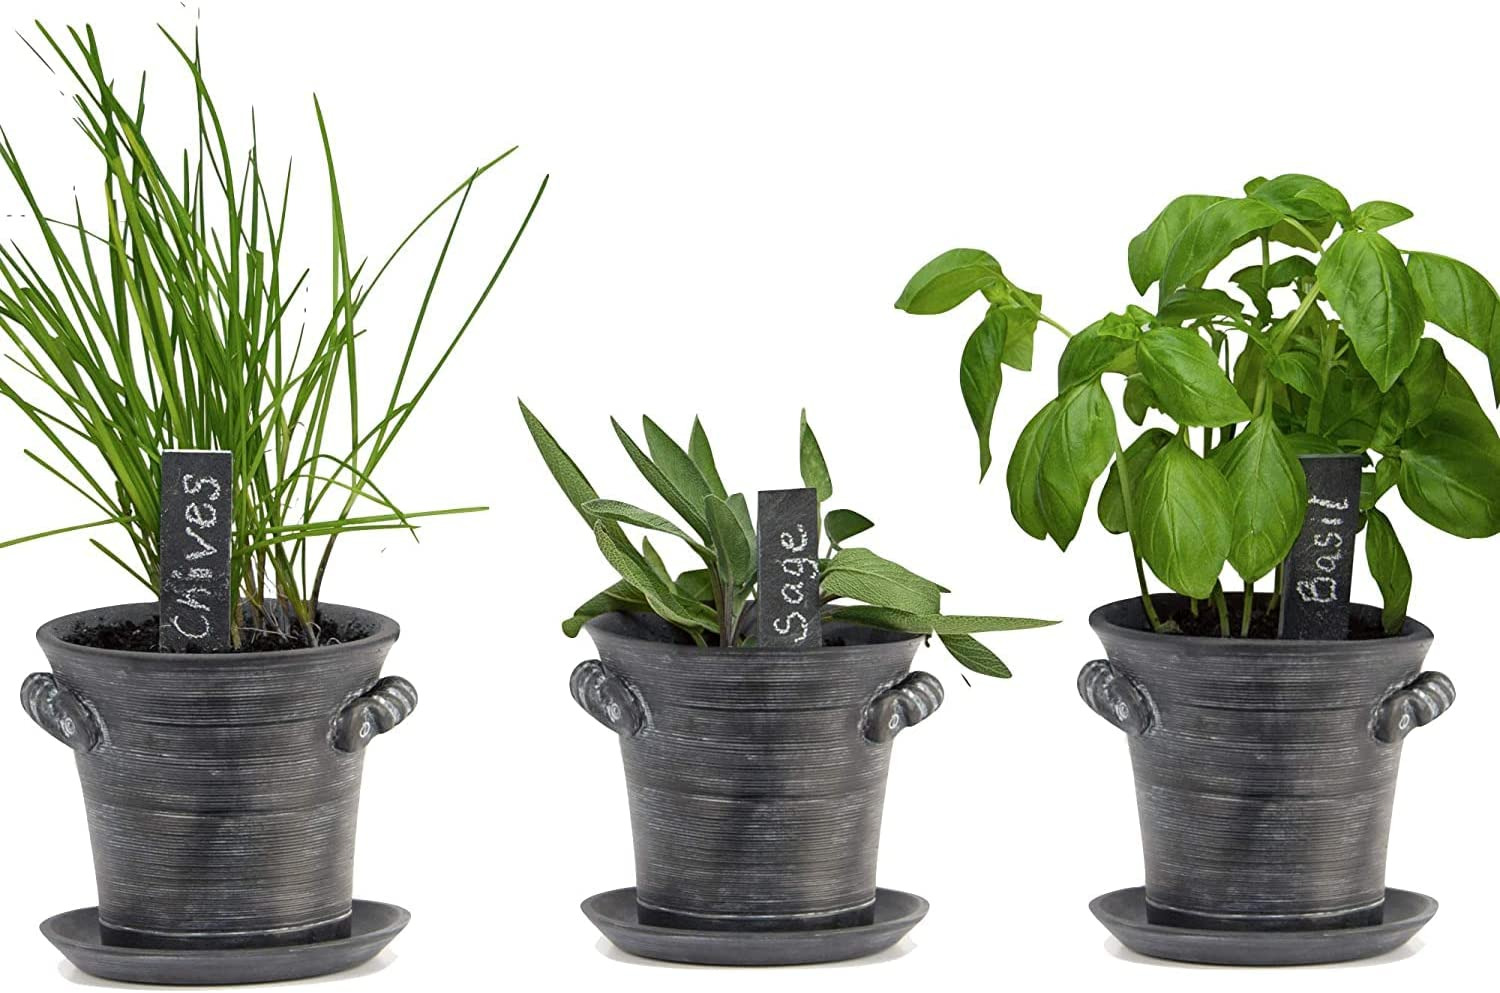 Herb Growing Kit - Grow an Indoor Garden, Herb Kitchen Windowsill - Non GMO Seed